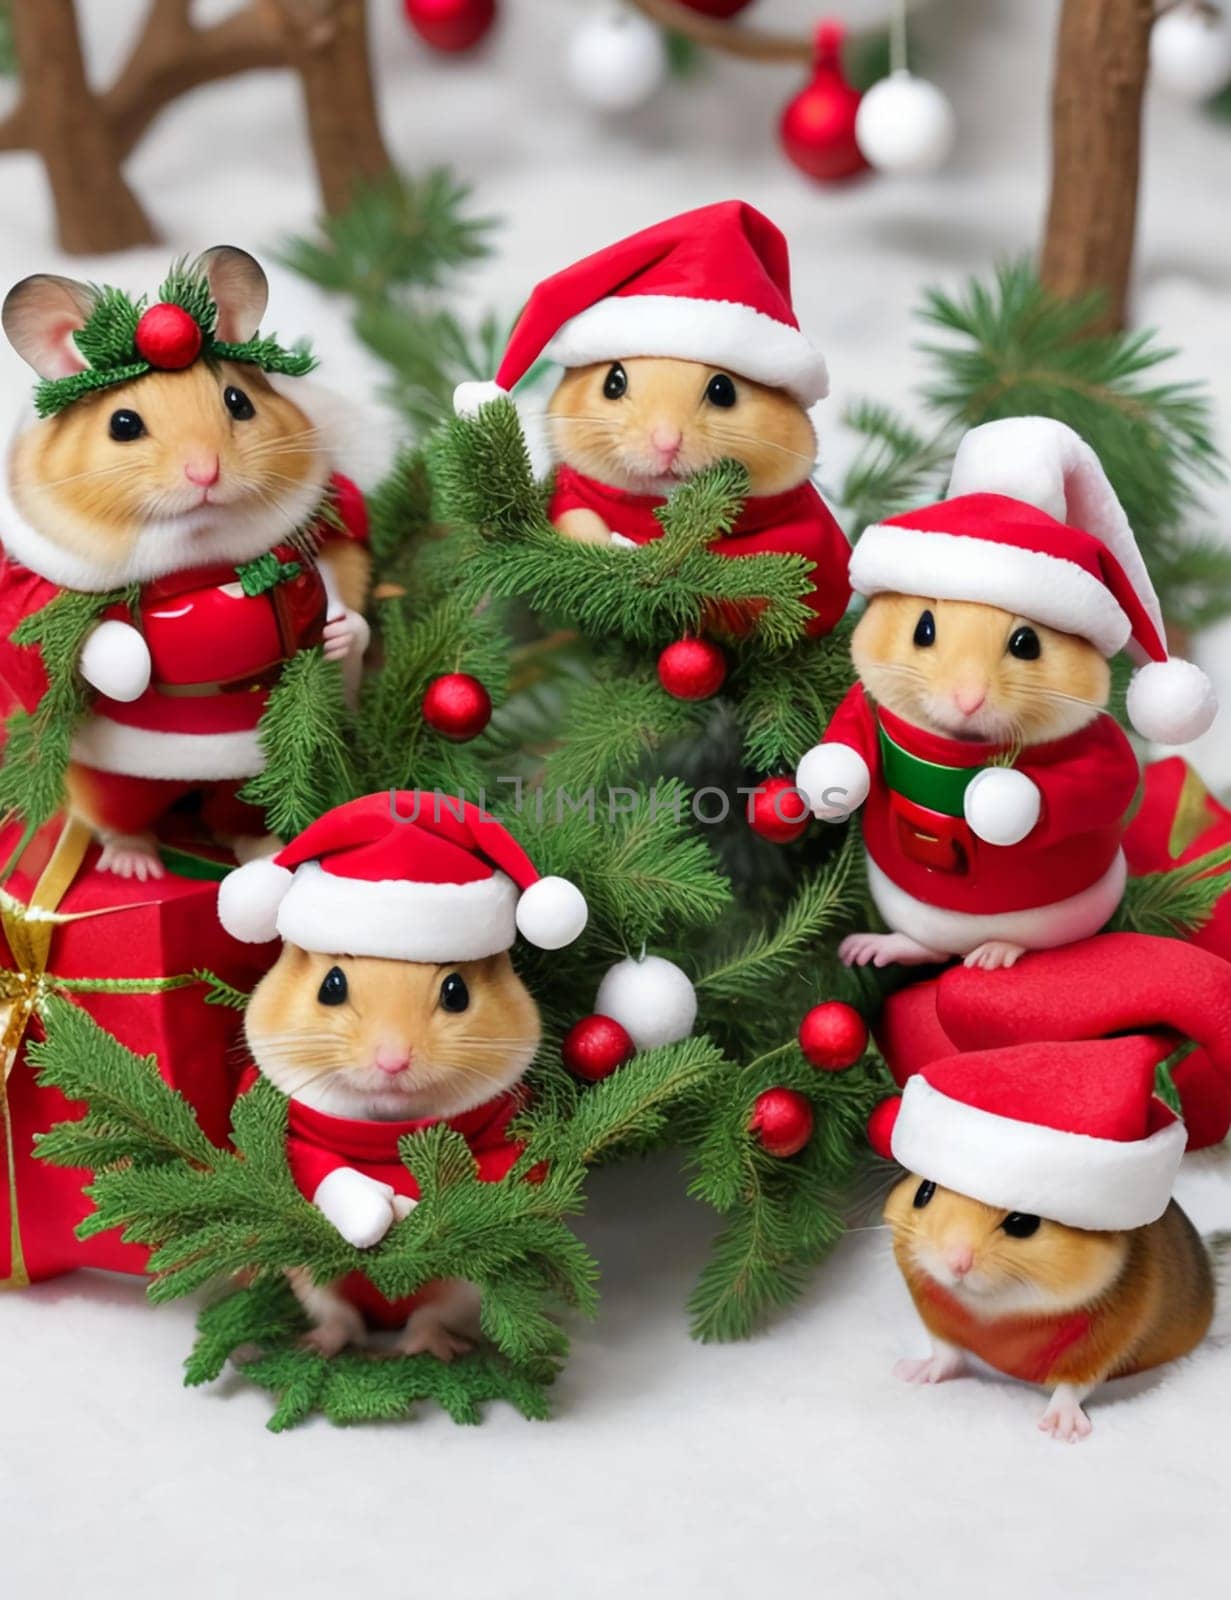 Hamsters in Santa's Christmas Hats by Севостьянов